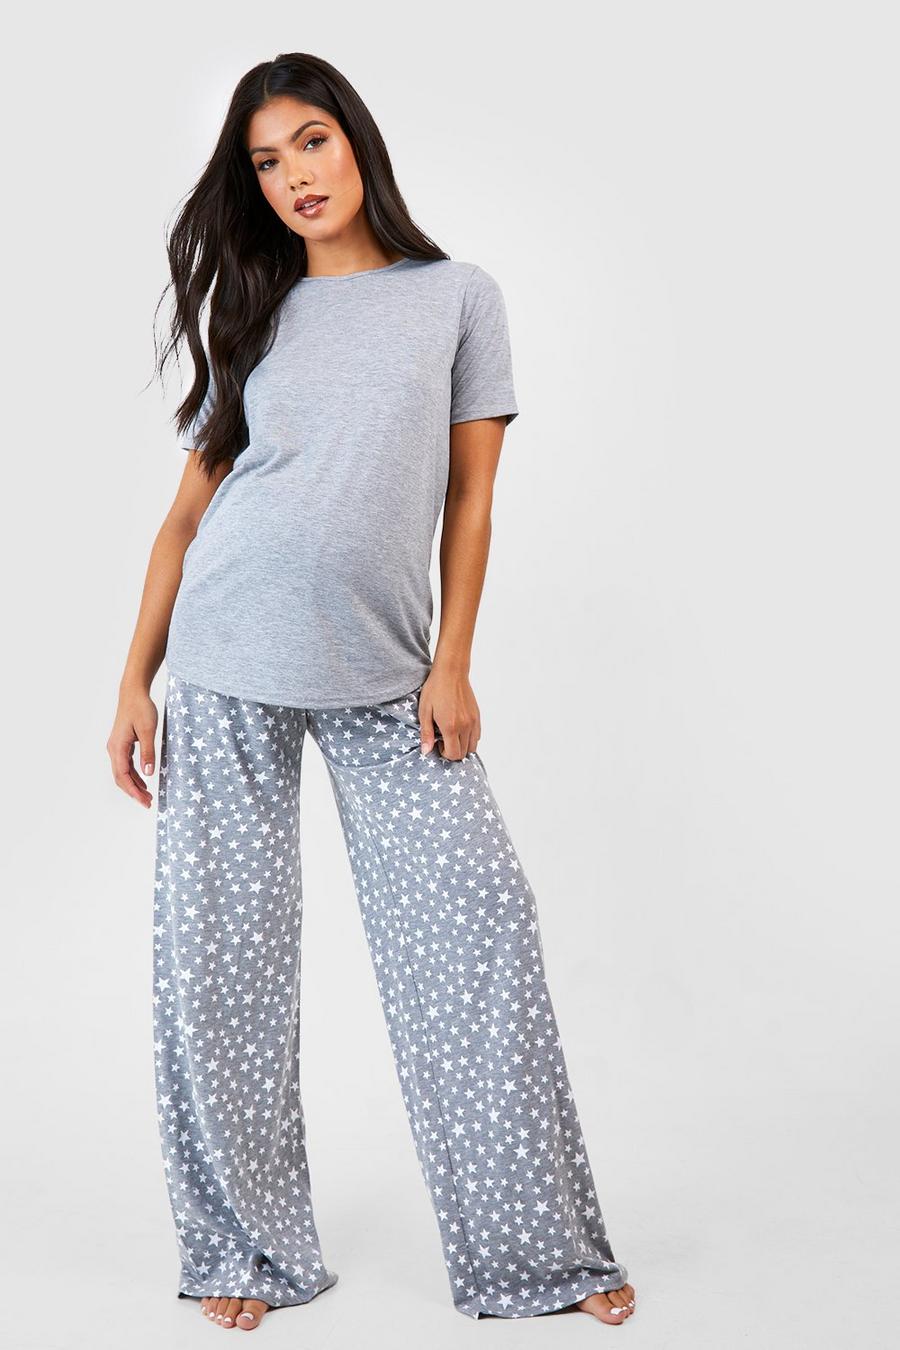 Grey Maternity Star Print Pants Pajama Set